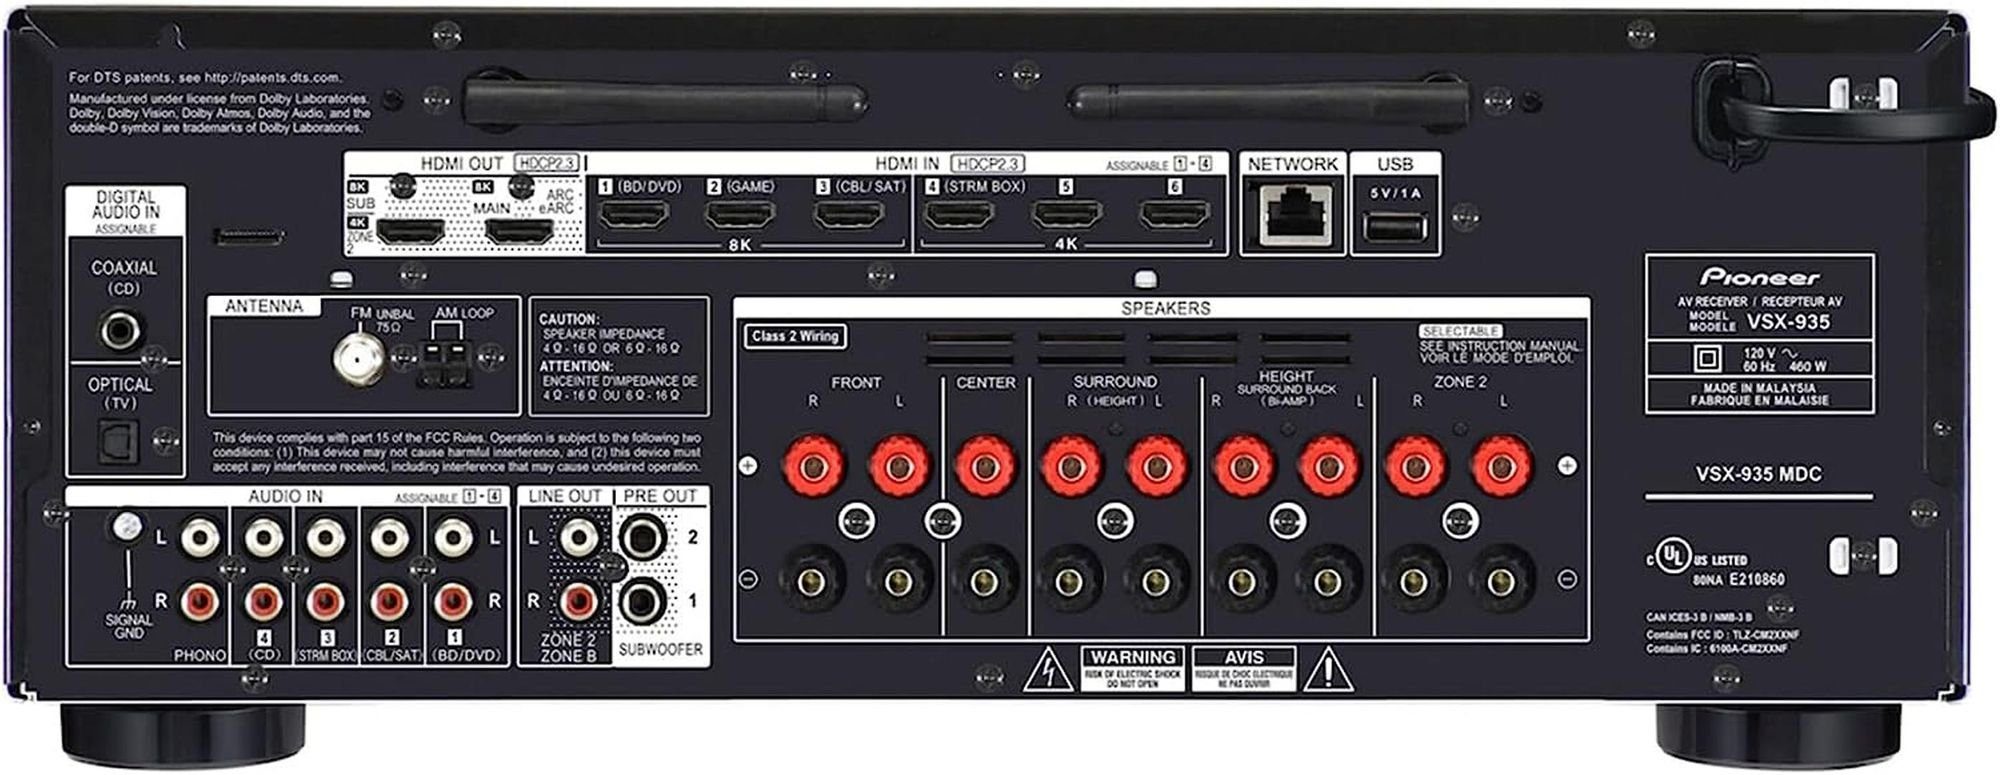 VSX-935M2 Atmos 8K Receiver AV Sonos schwarz AirPlay Pioneer WiFi BT 7.2 AV-Receiver